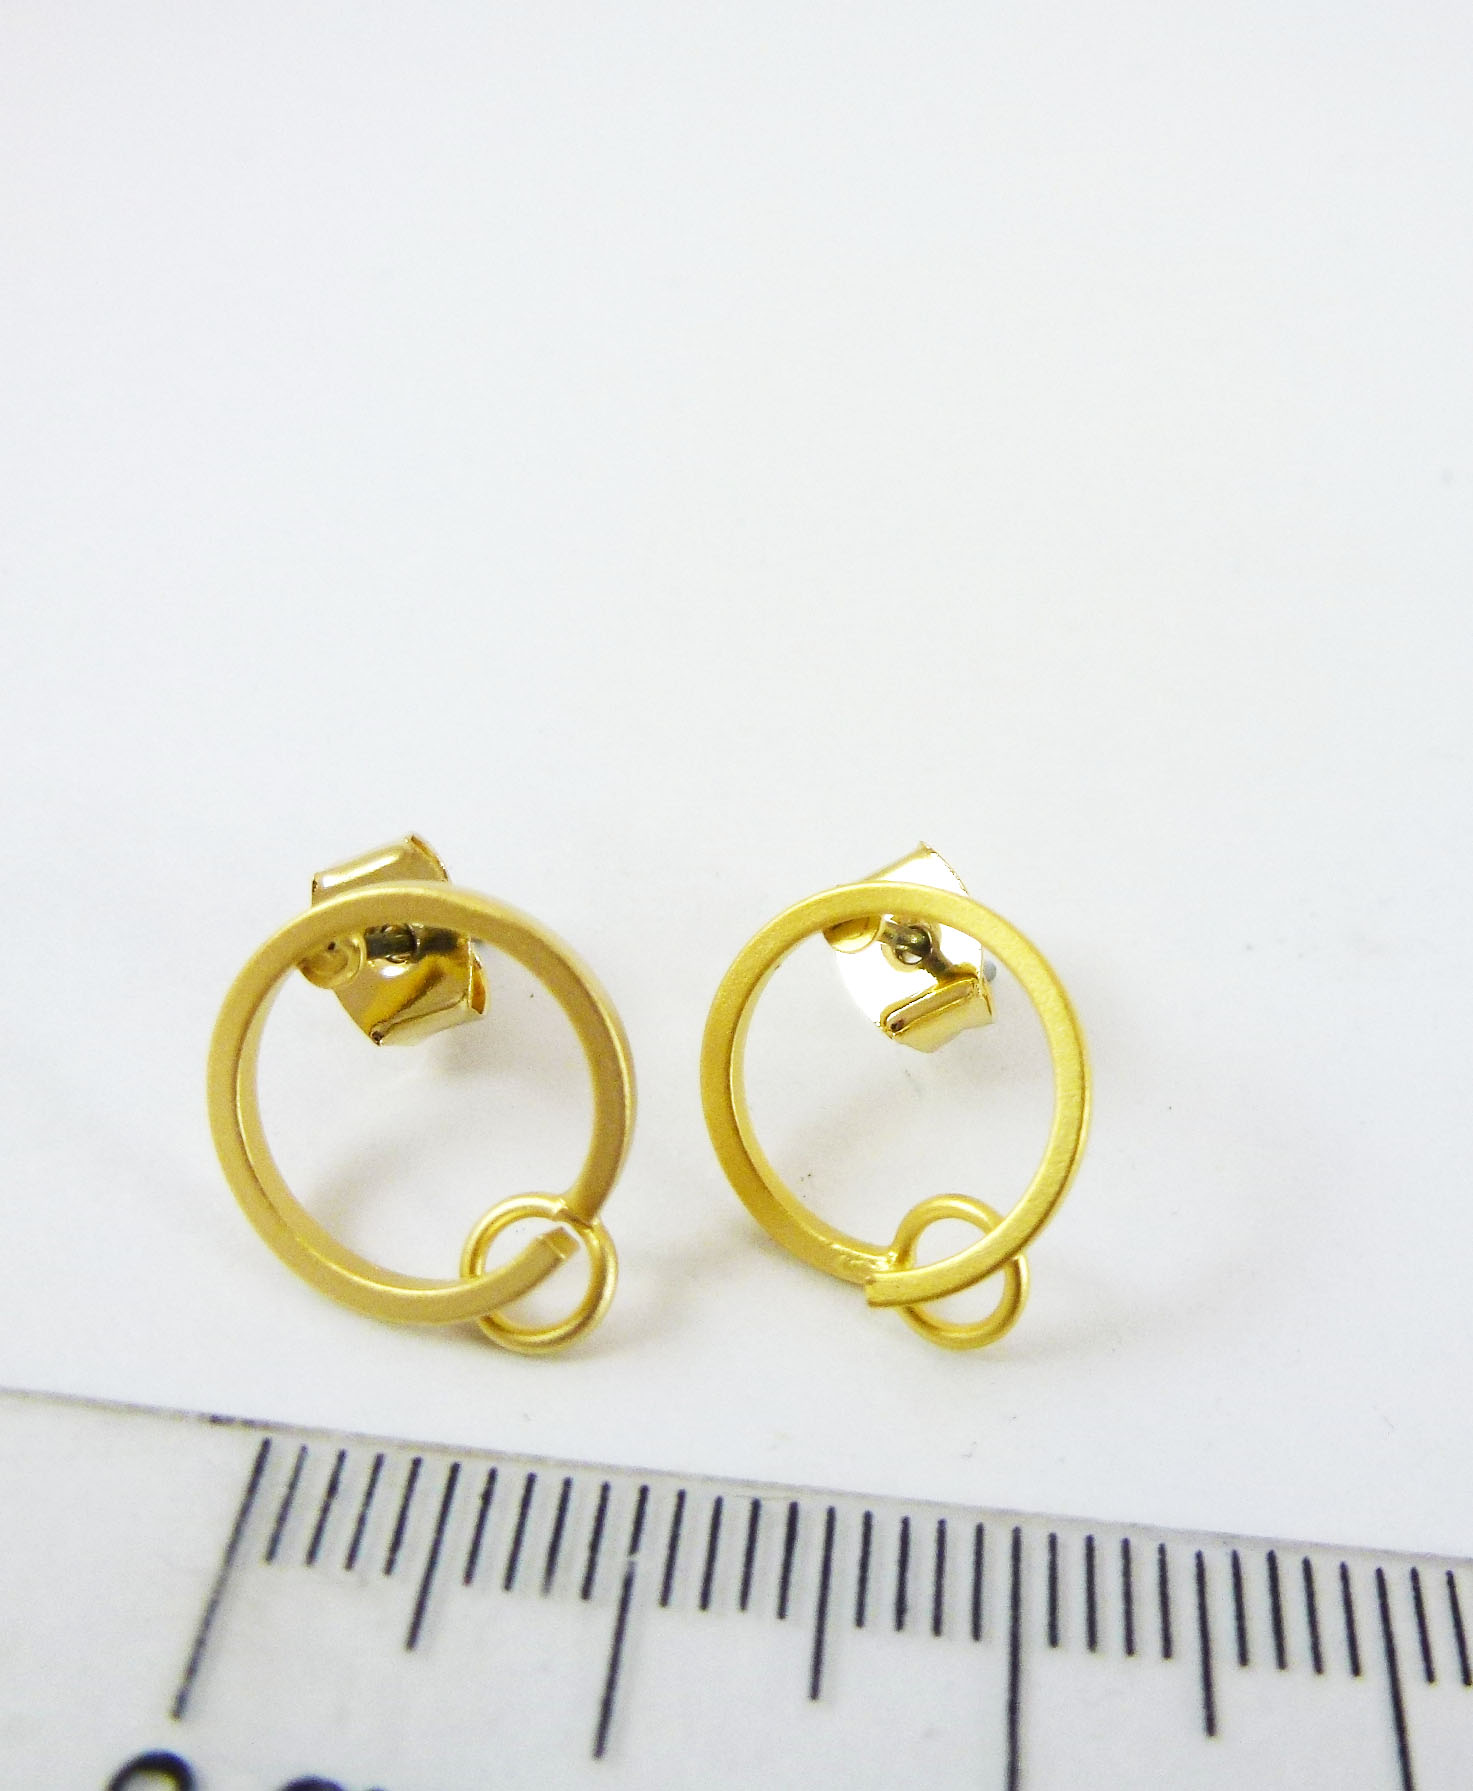 12mm銅鍍霧金圓環不銹鋼耳針